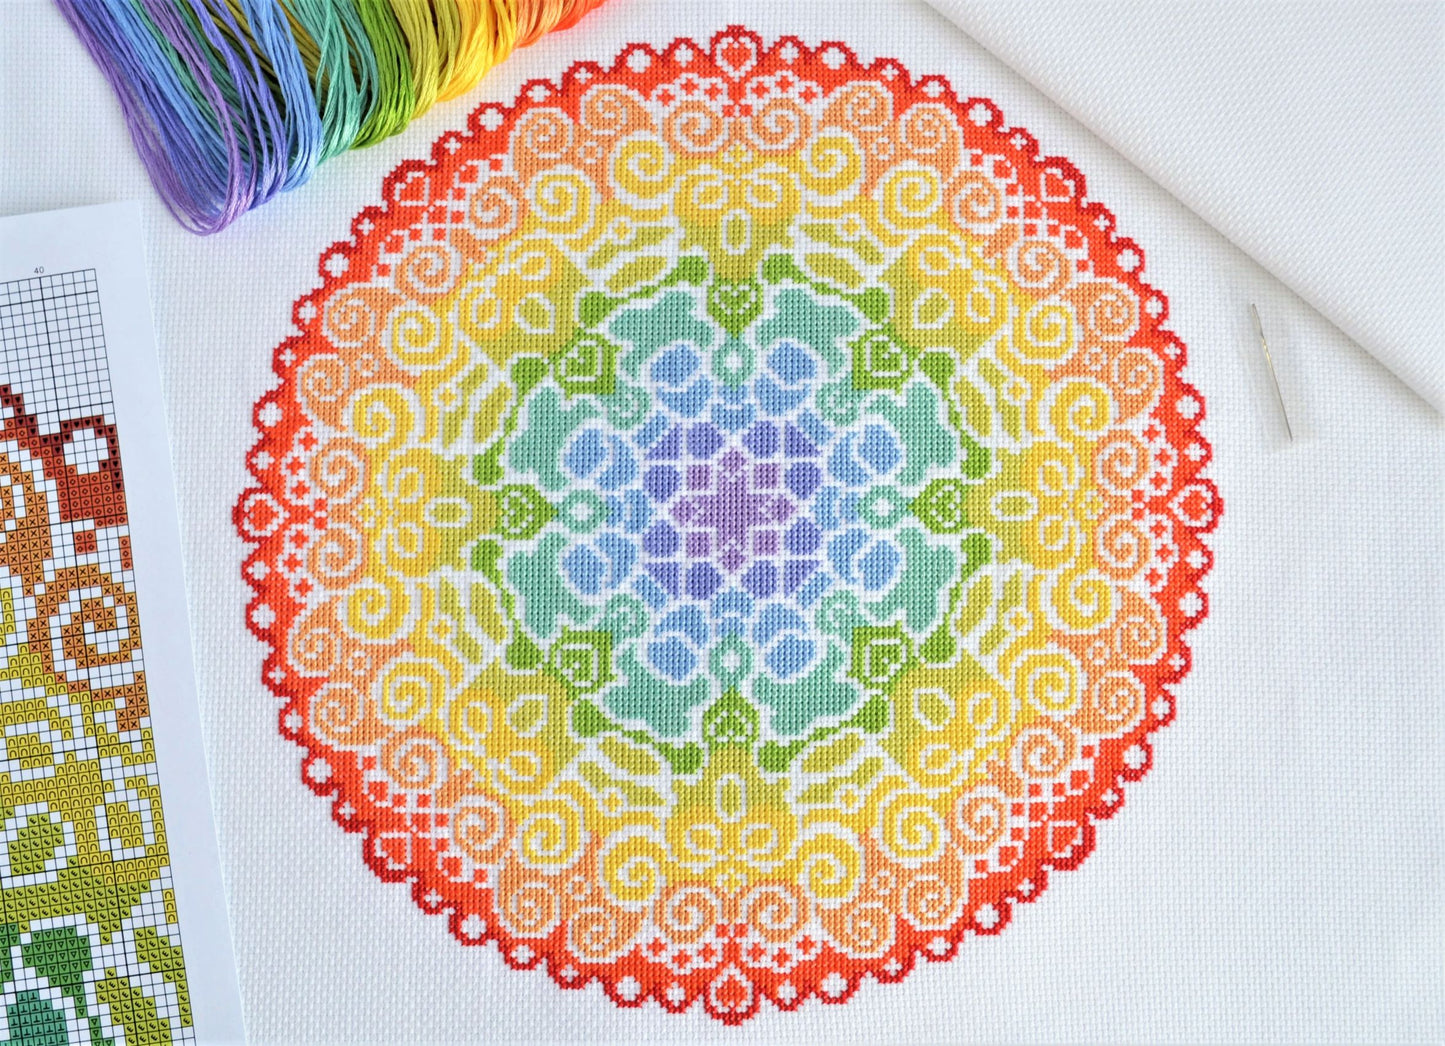 Spectrum Mandala Cross Stitch Kit